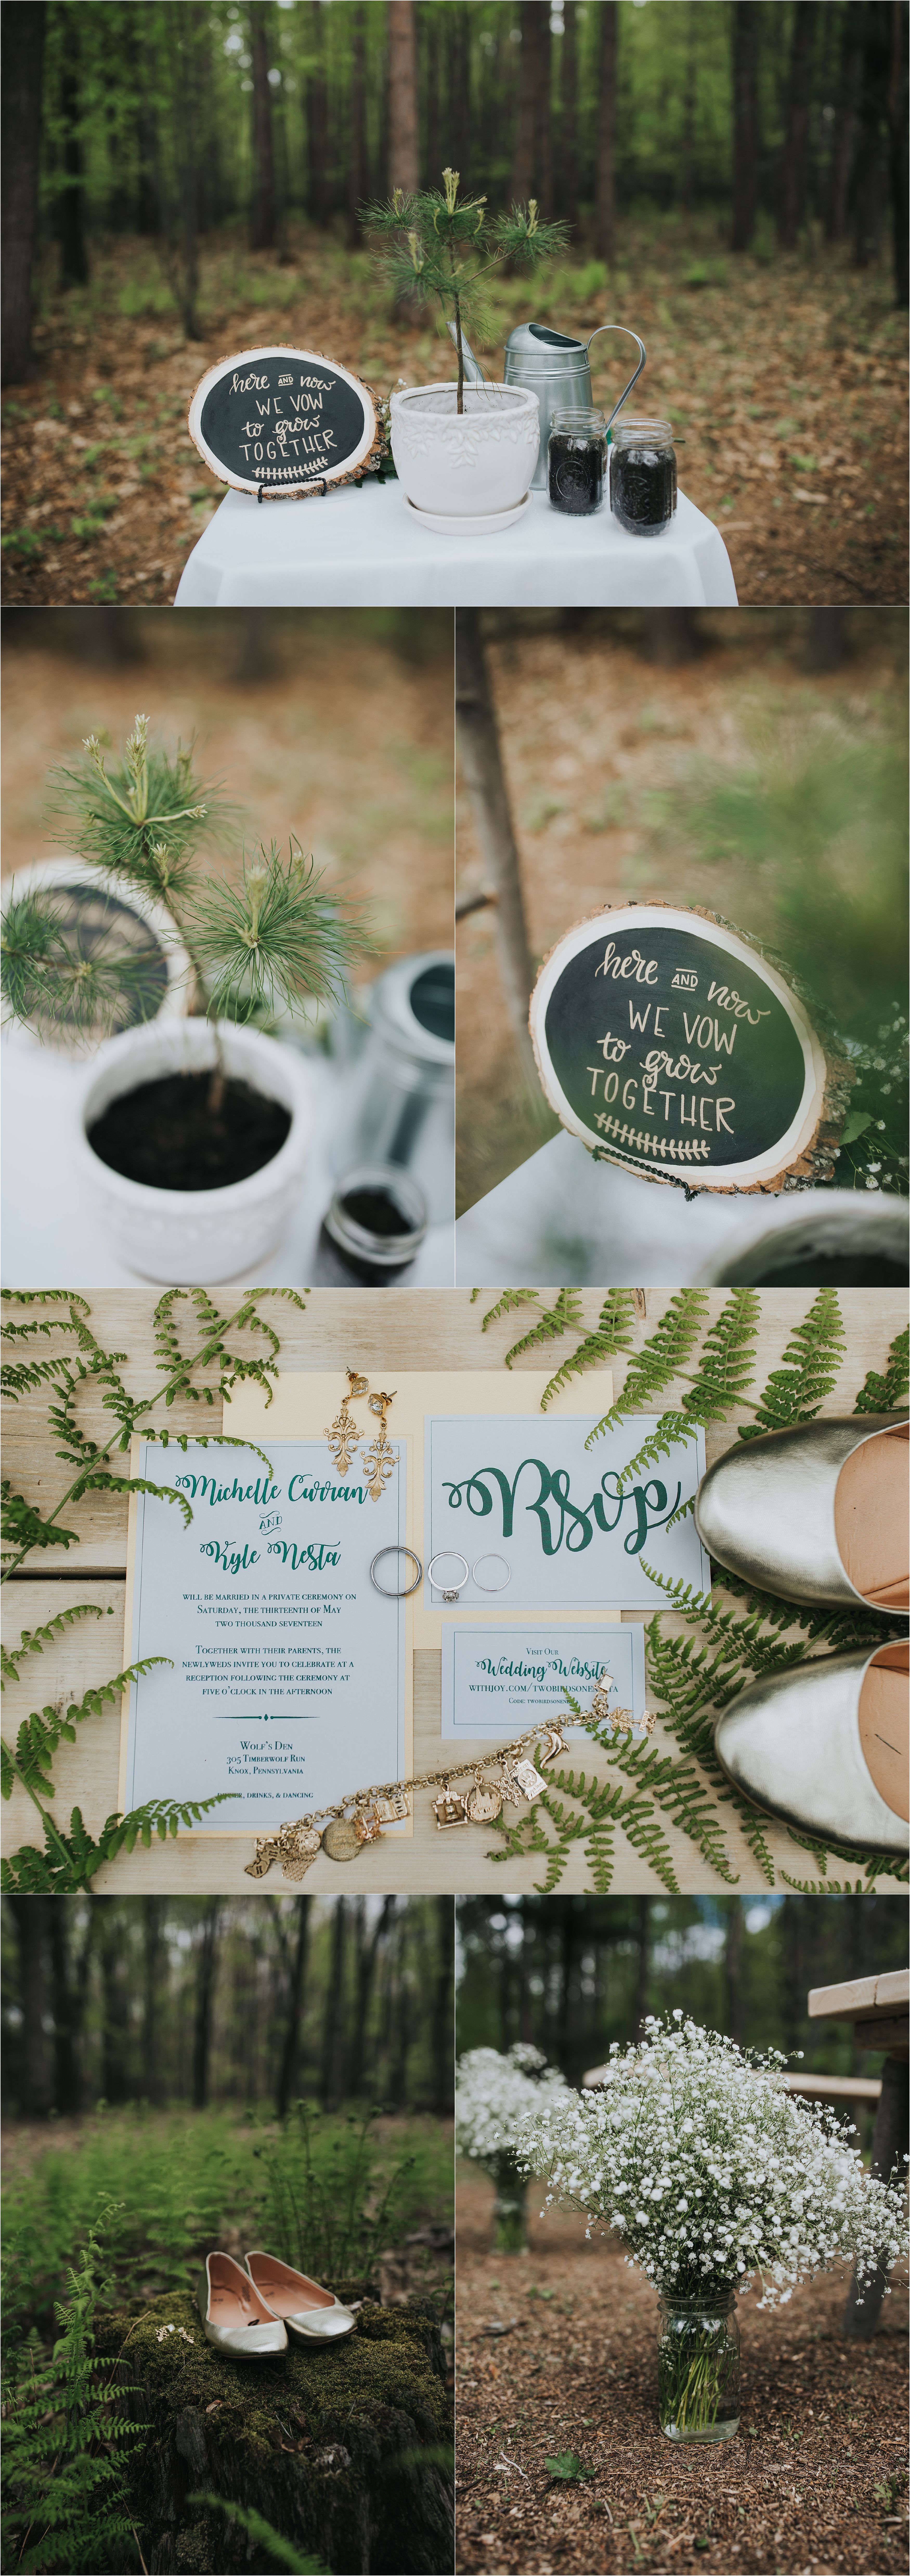 rustic-details-in-woods-at-backyard-wedding